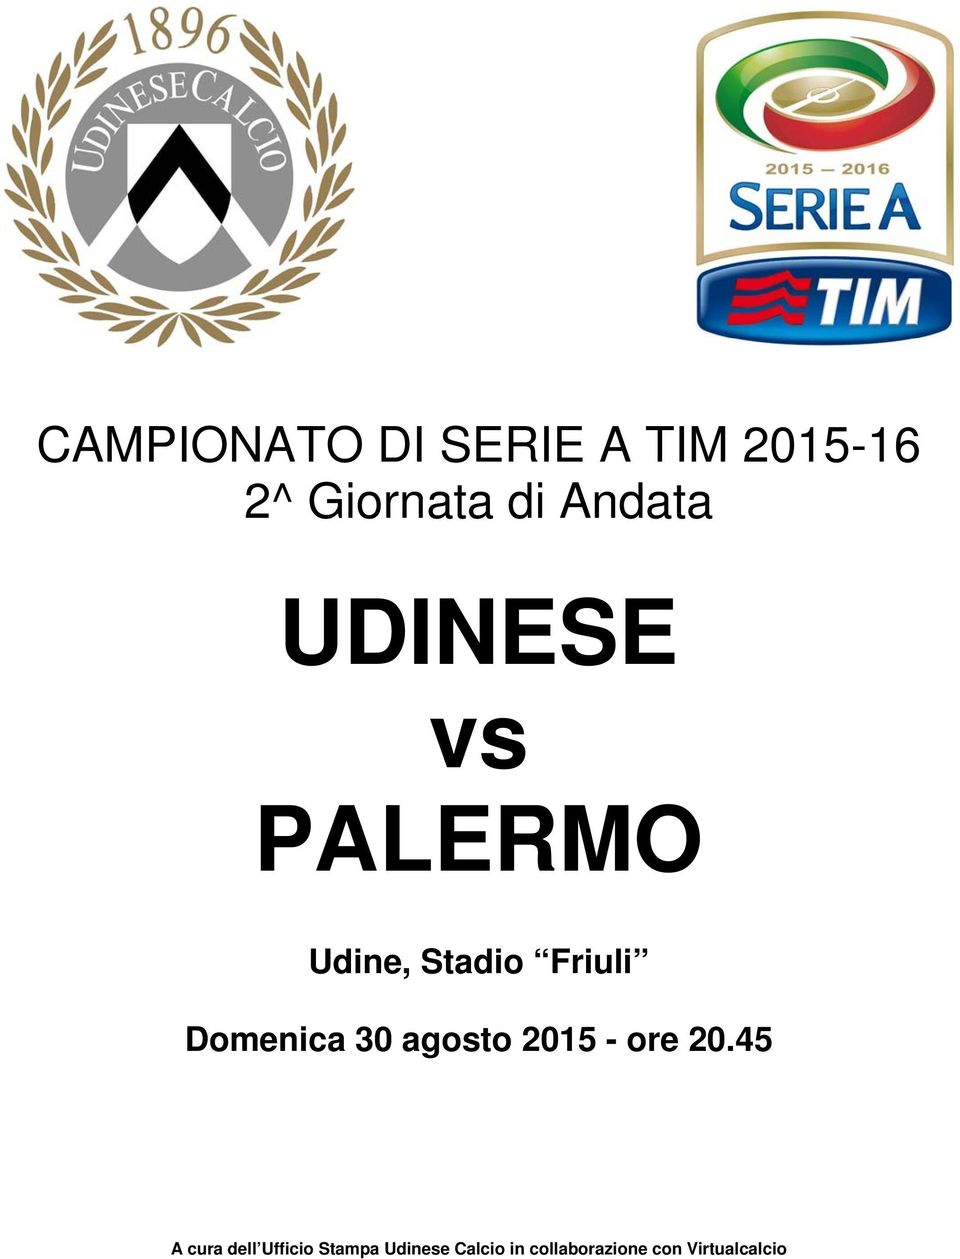 UDINESE vs PALERMO Udine, Stadio